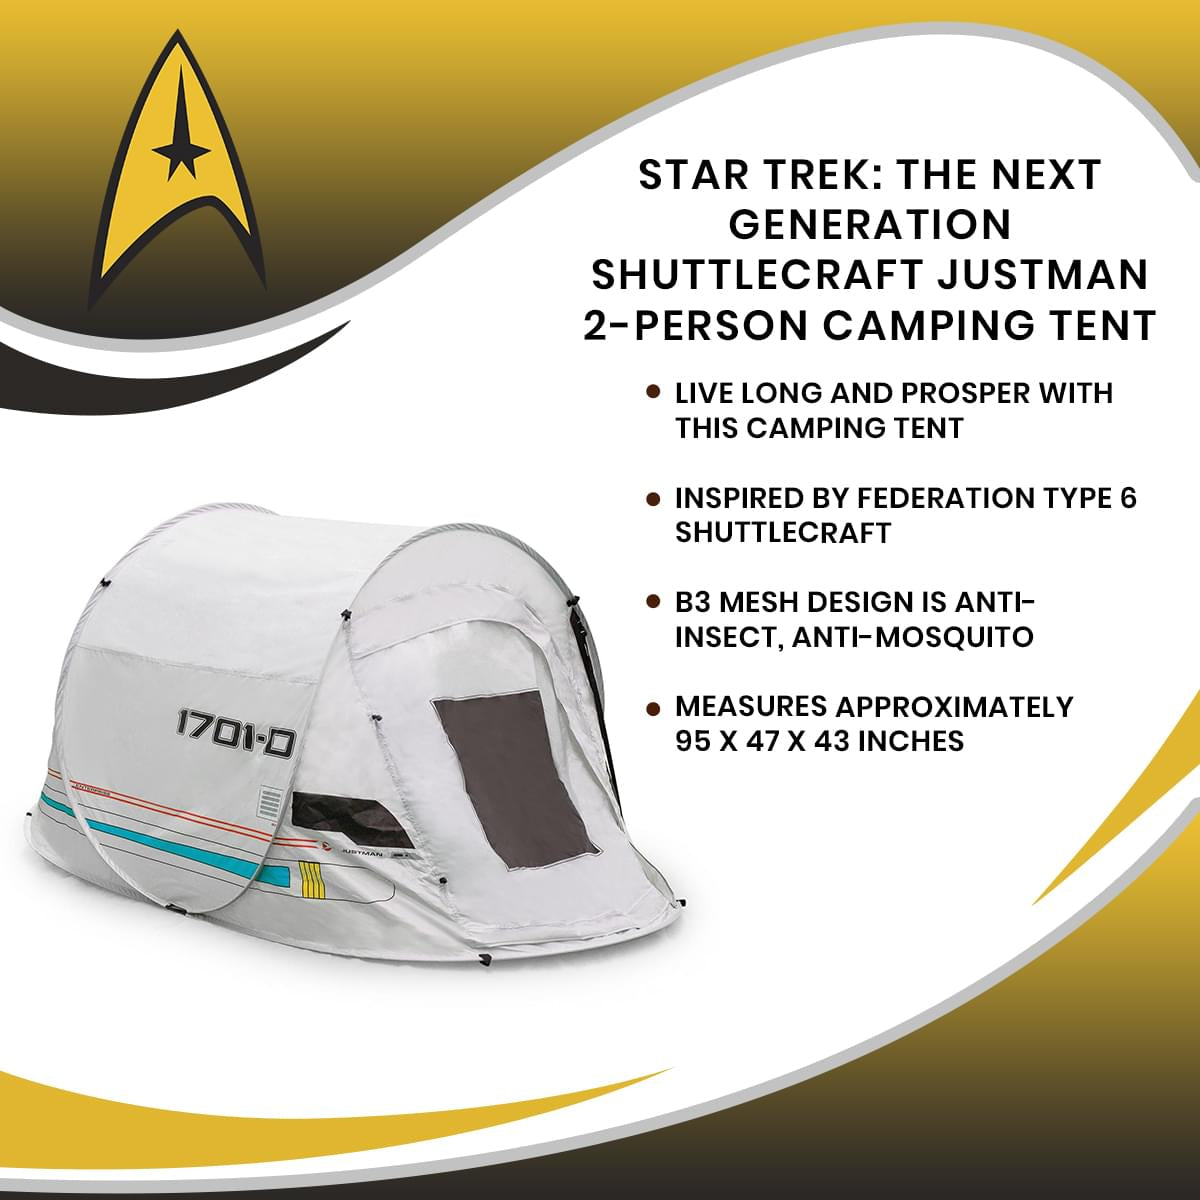 Star Trek: The Next Generation Shuttlecraft Justman 2-Person Camping Tent